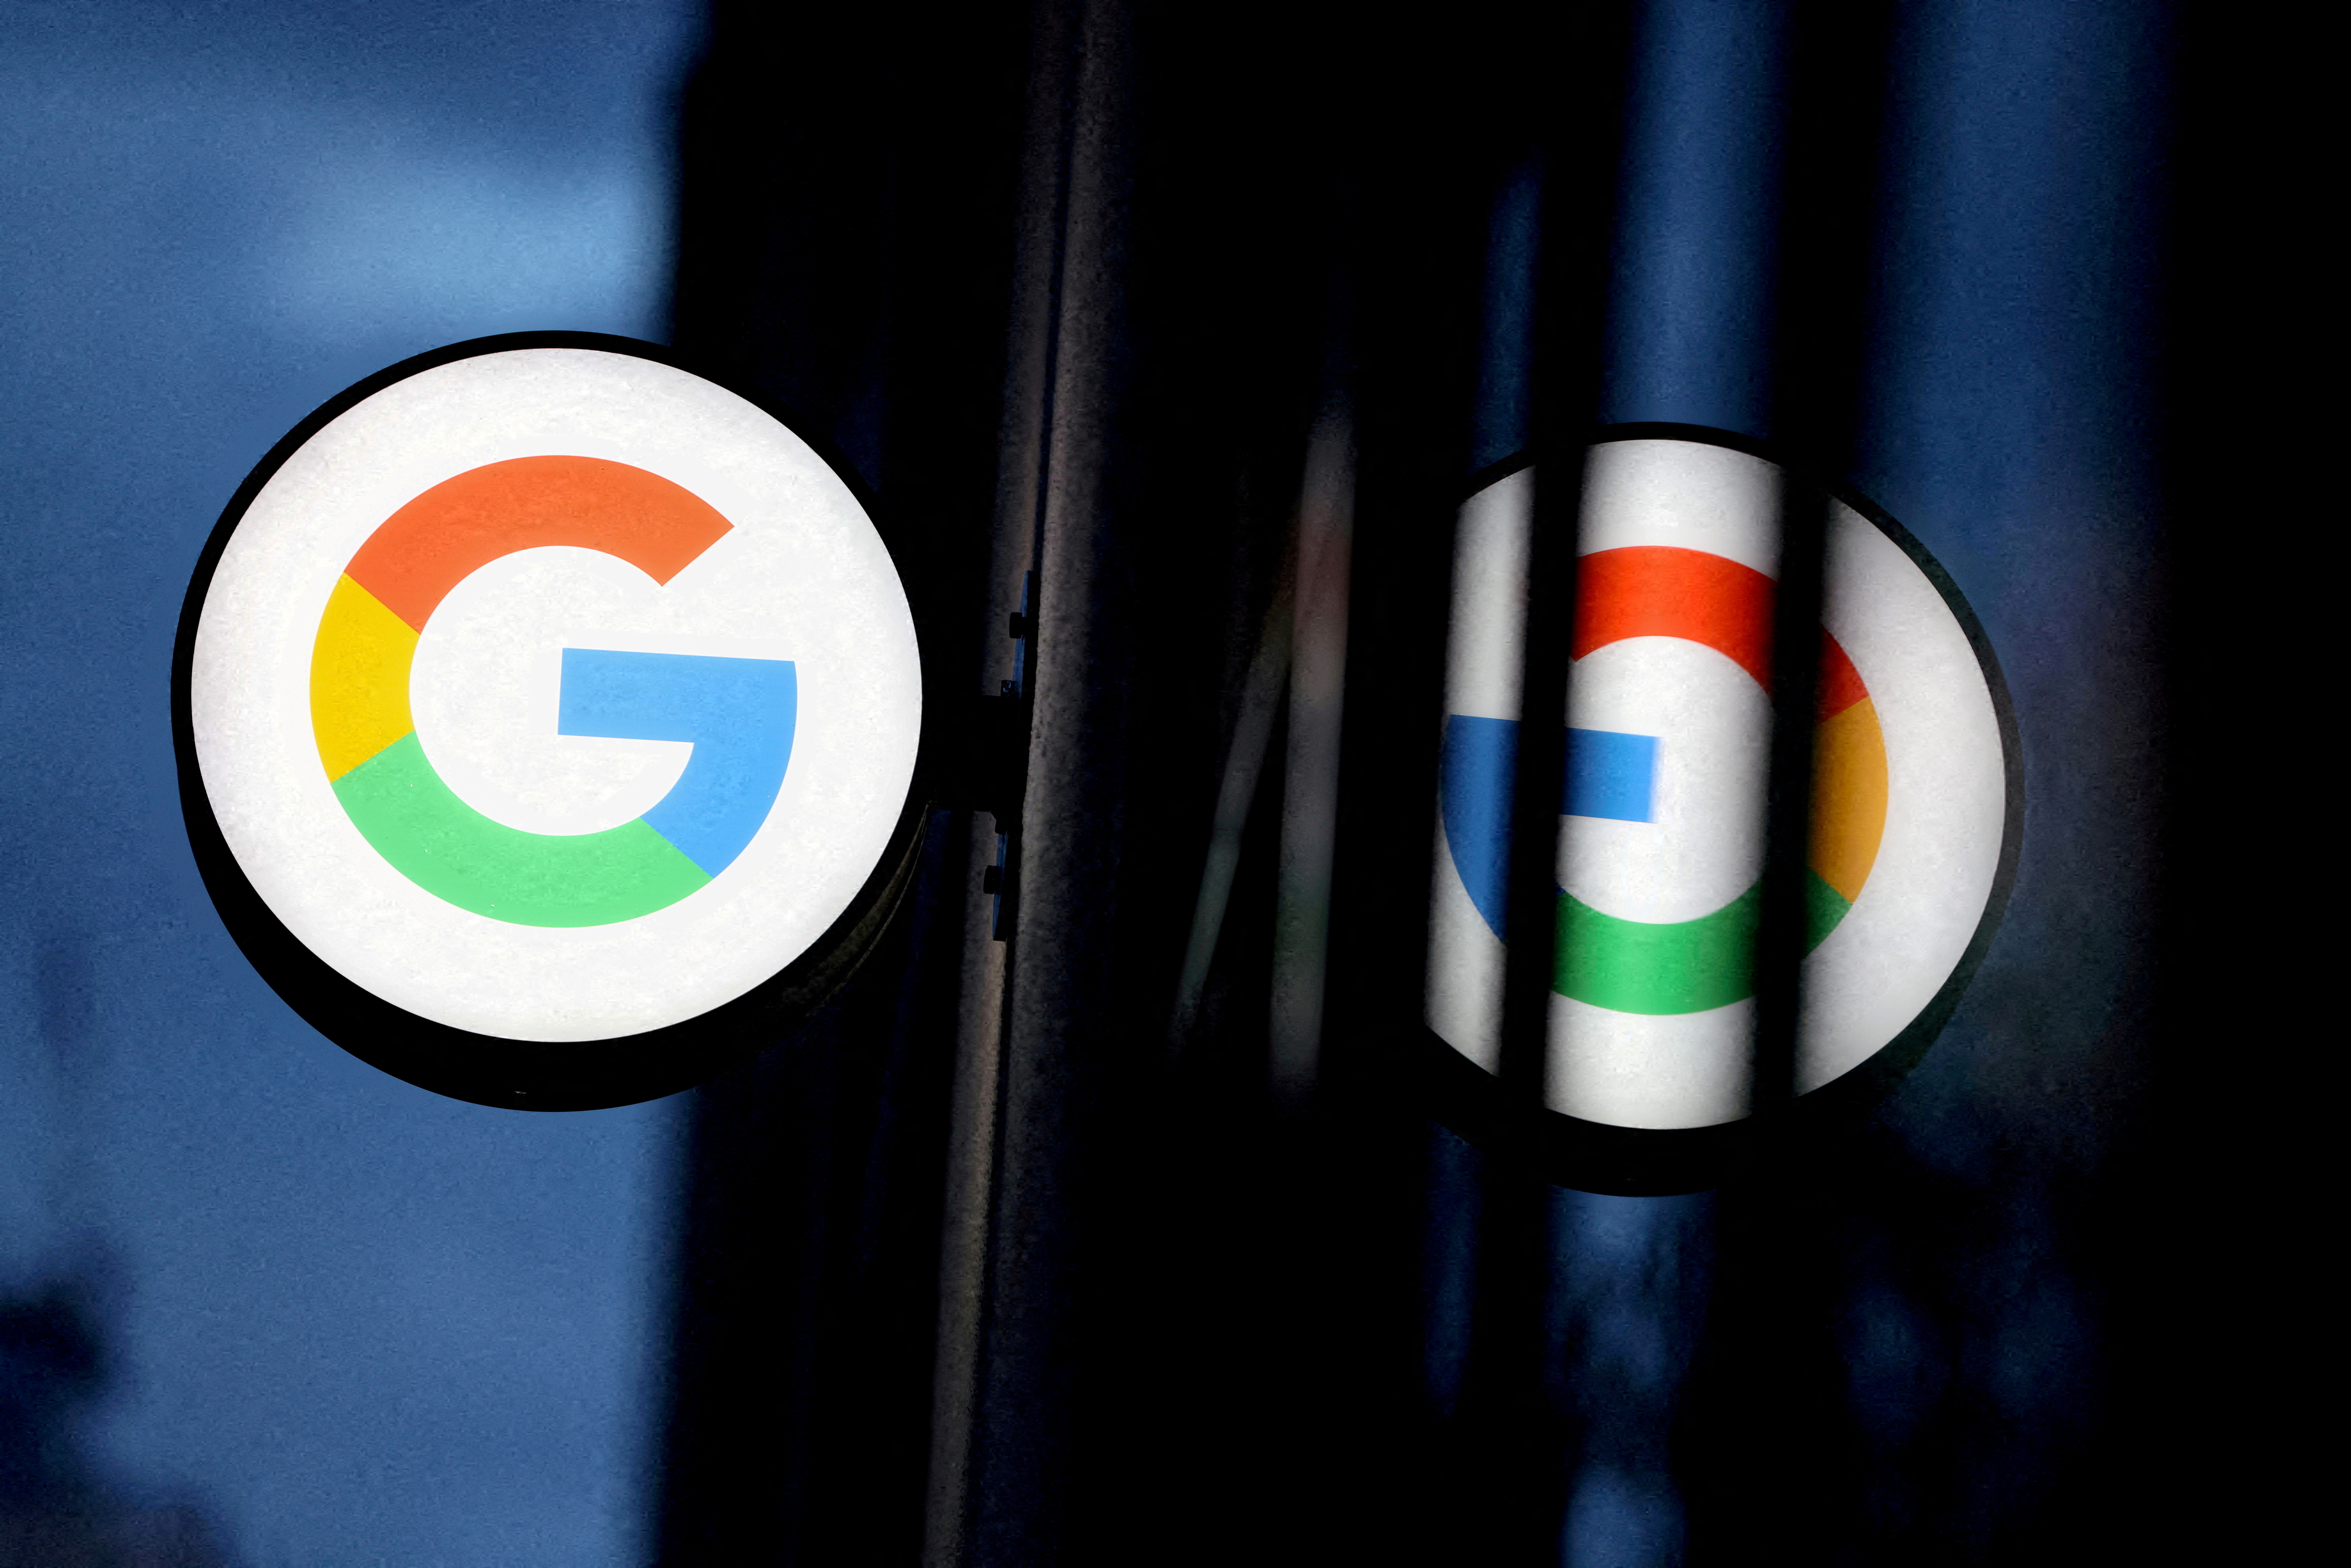 The logo of Google LLC